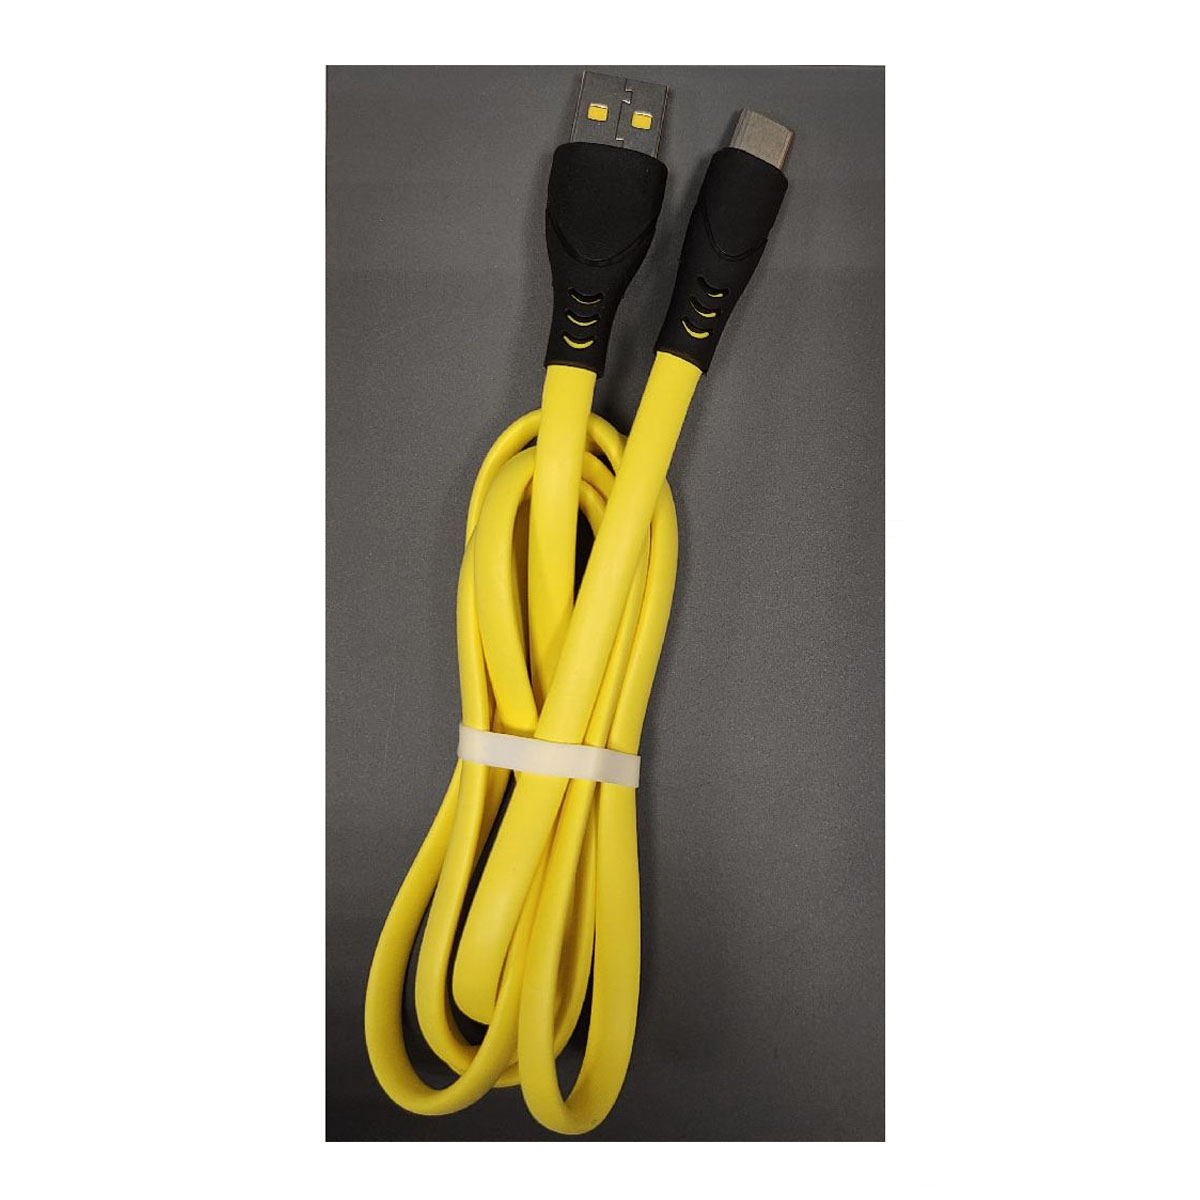 Кабель G08 USB Type C, длина 1 метр, цвет черно желтый